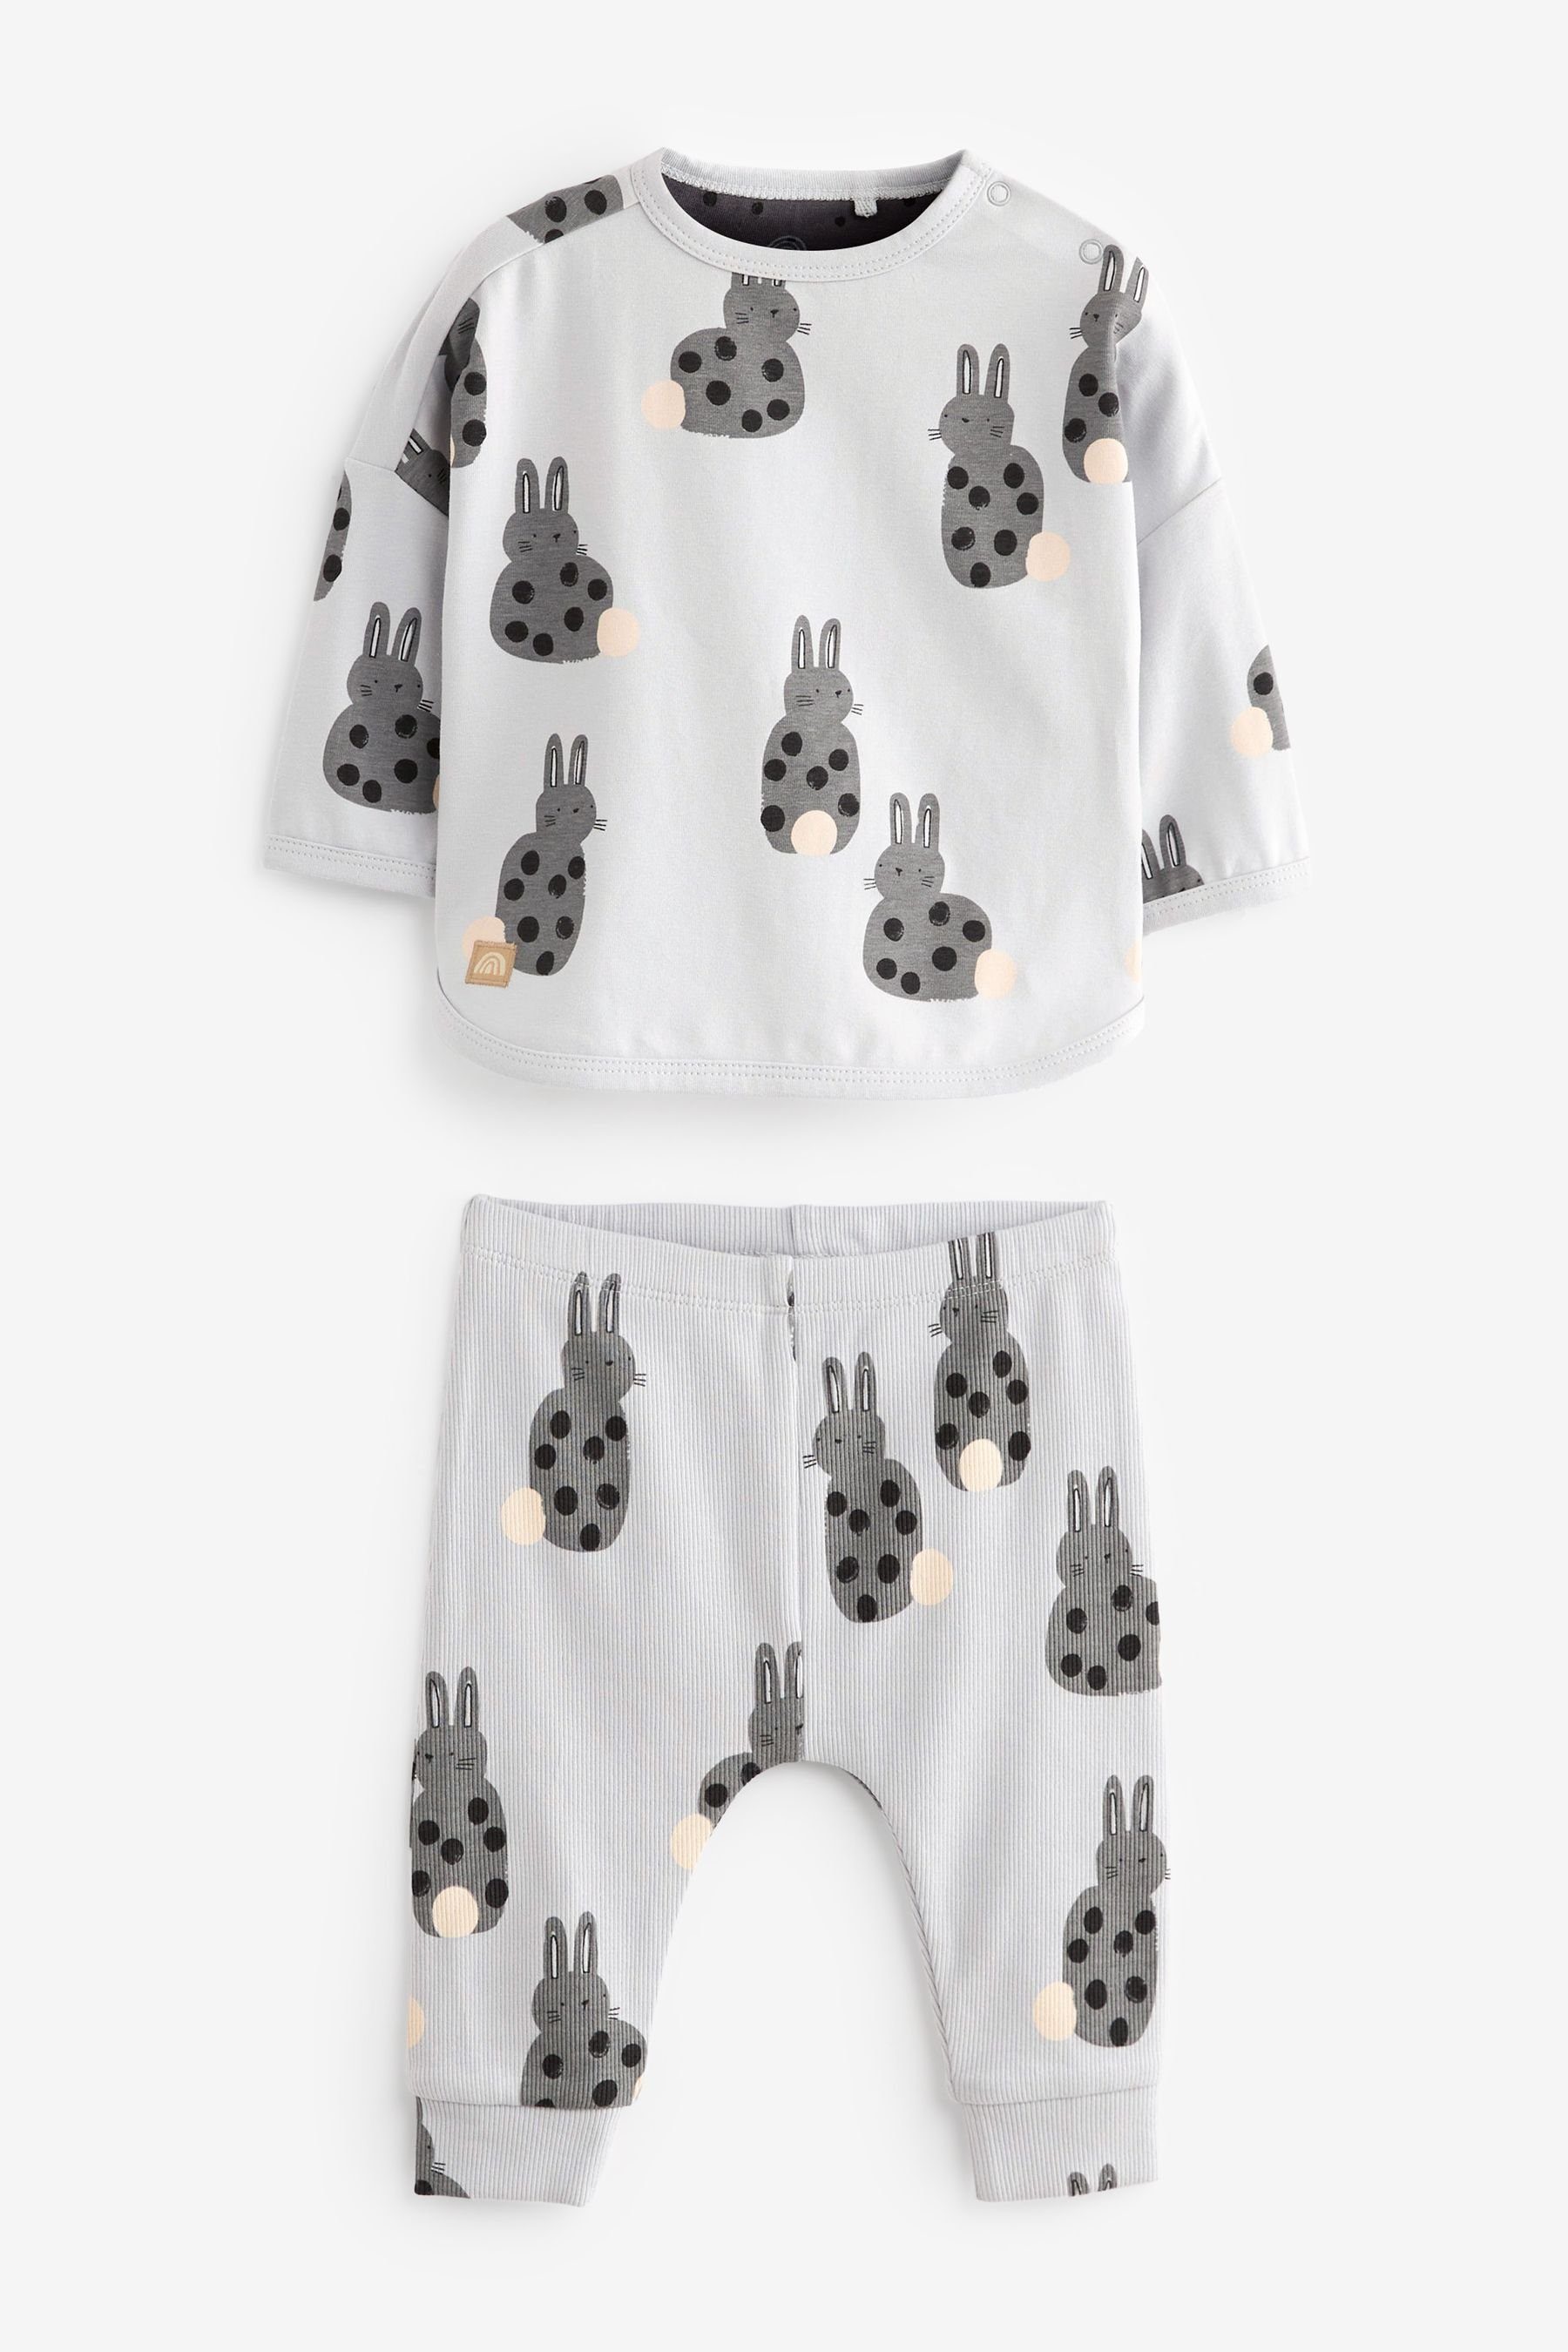 Next Shirt und Bunny Leggings im Leggings Baby-Set & (6-tlg) 6-teiligen Monochrome T-Shirts